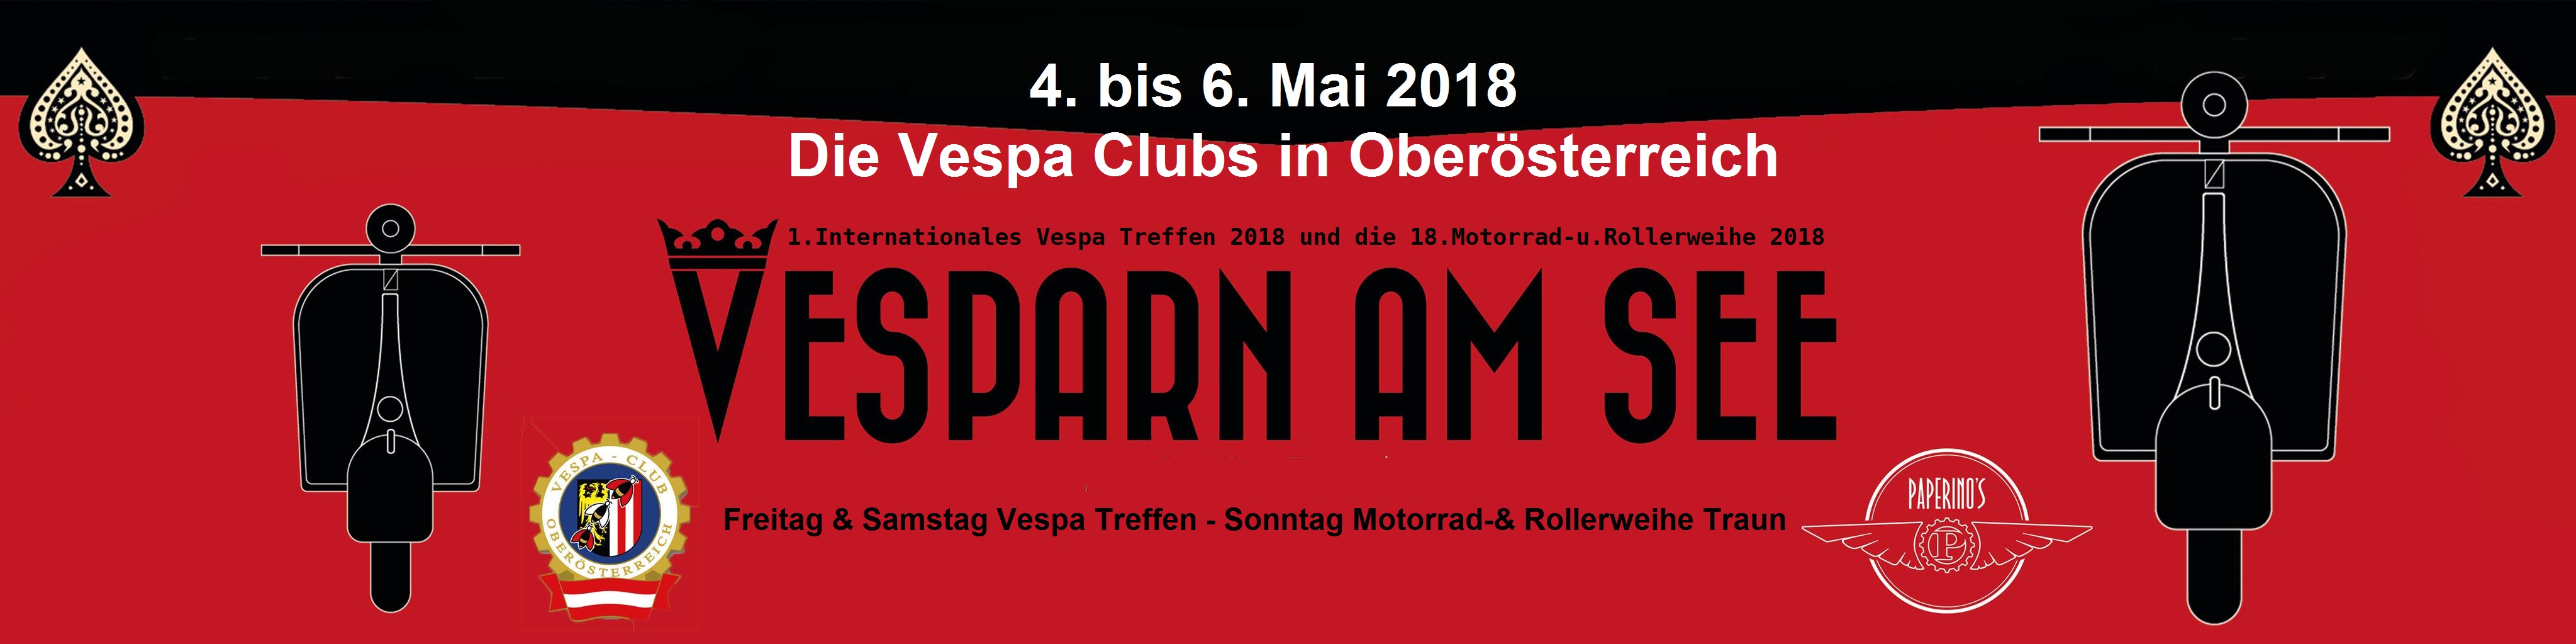 Vespa Treffen 2018